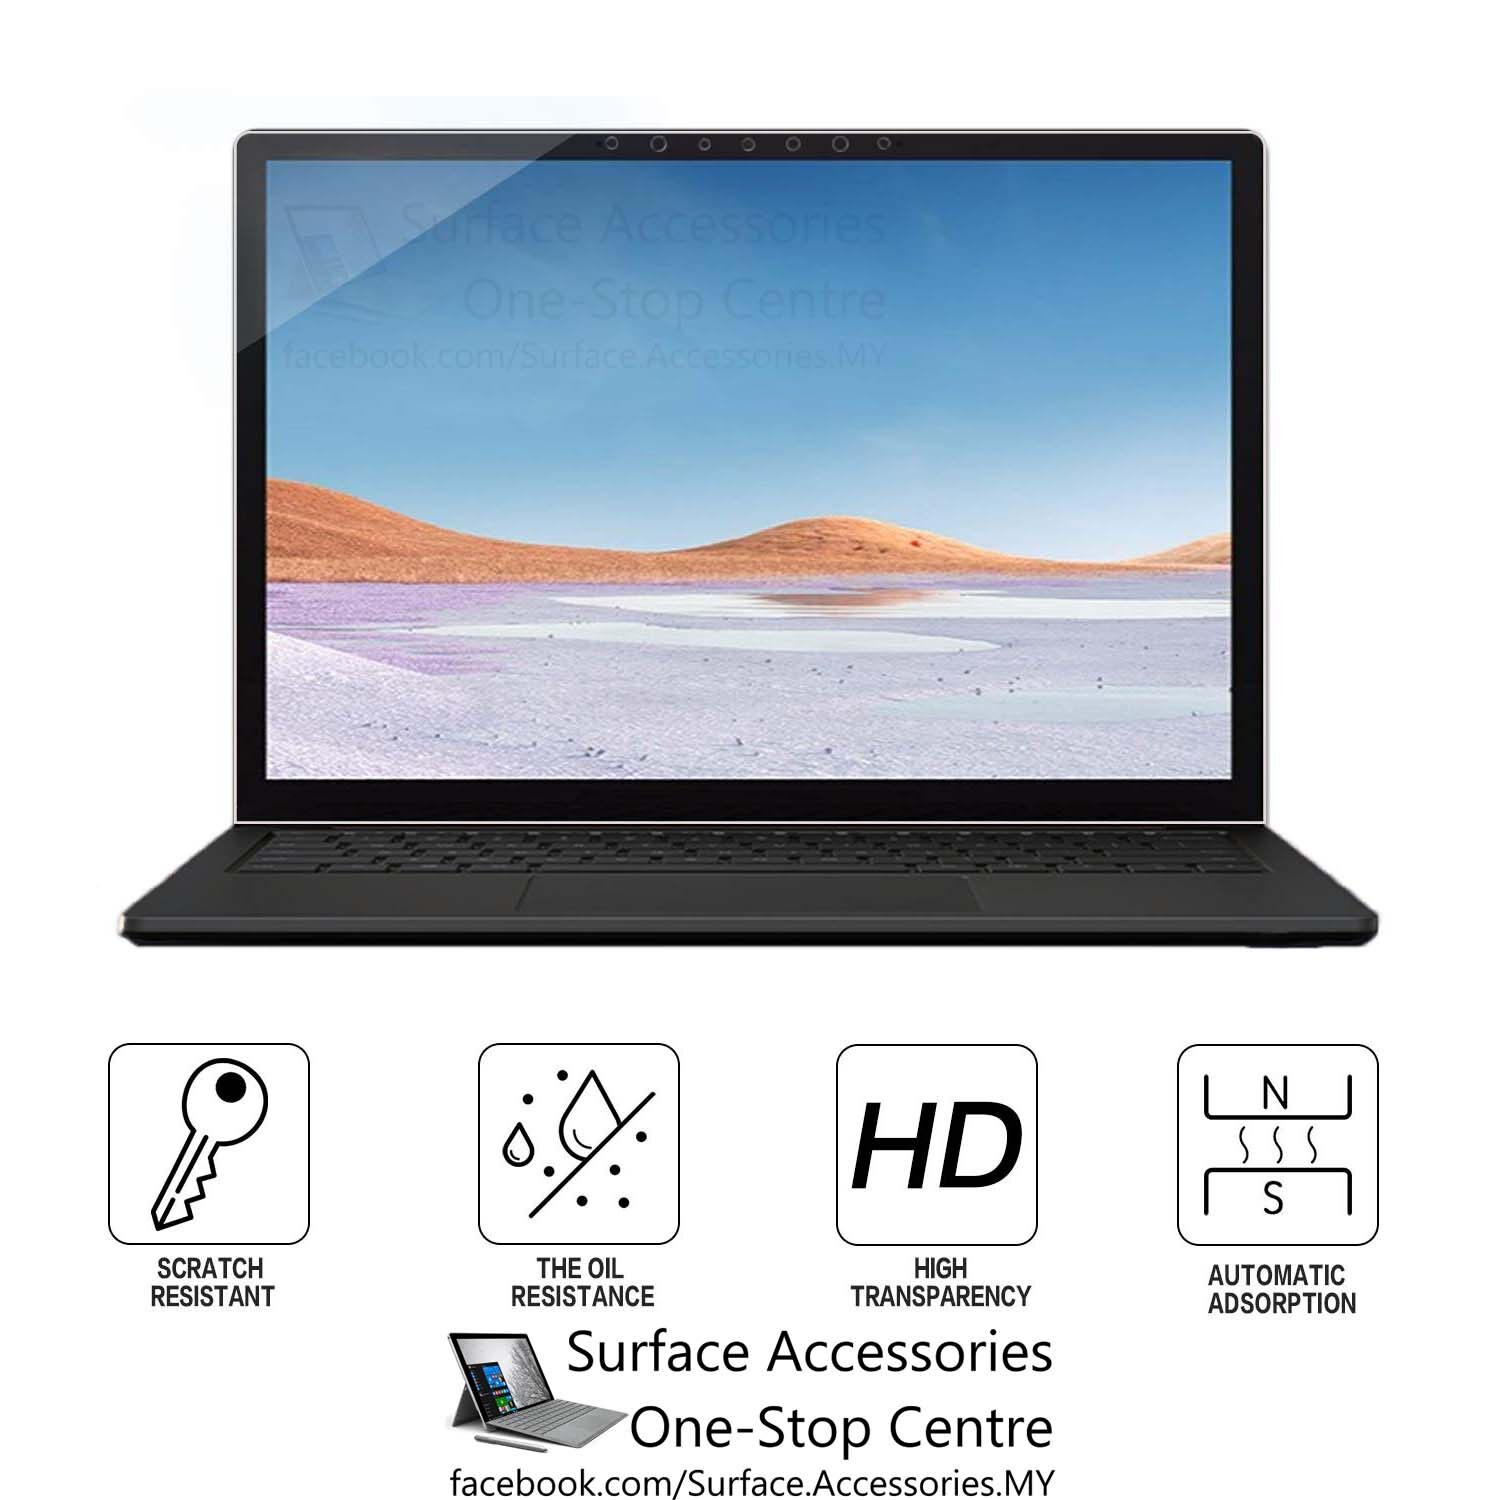 [MALAYSIA]Surface Laptop 3 15" Tempered Glass Hardness 9H Hardness Nano Coating Anti Shatter Film Microsoft Surface Laptop 3 2019 Surface Laptop 3 2020